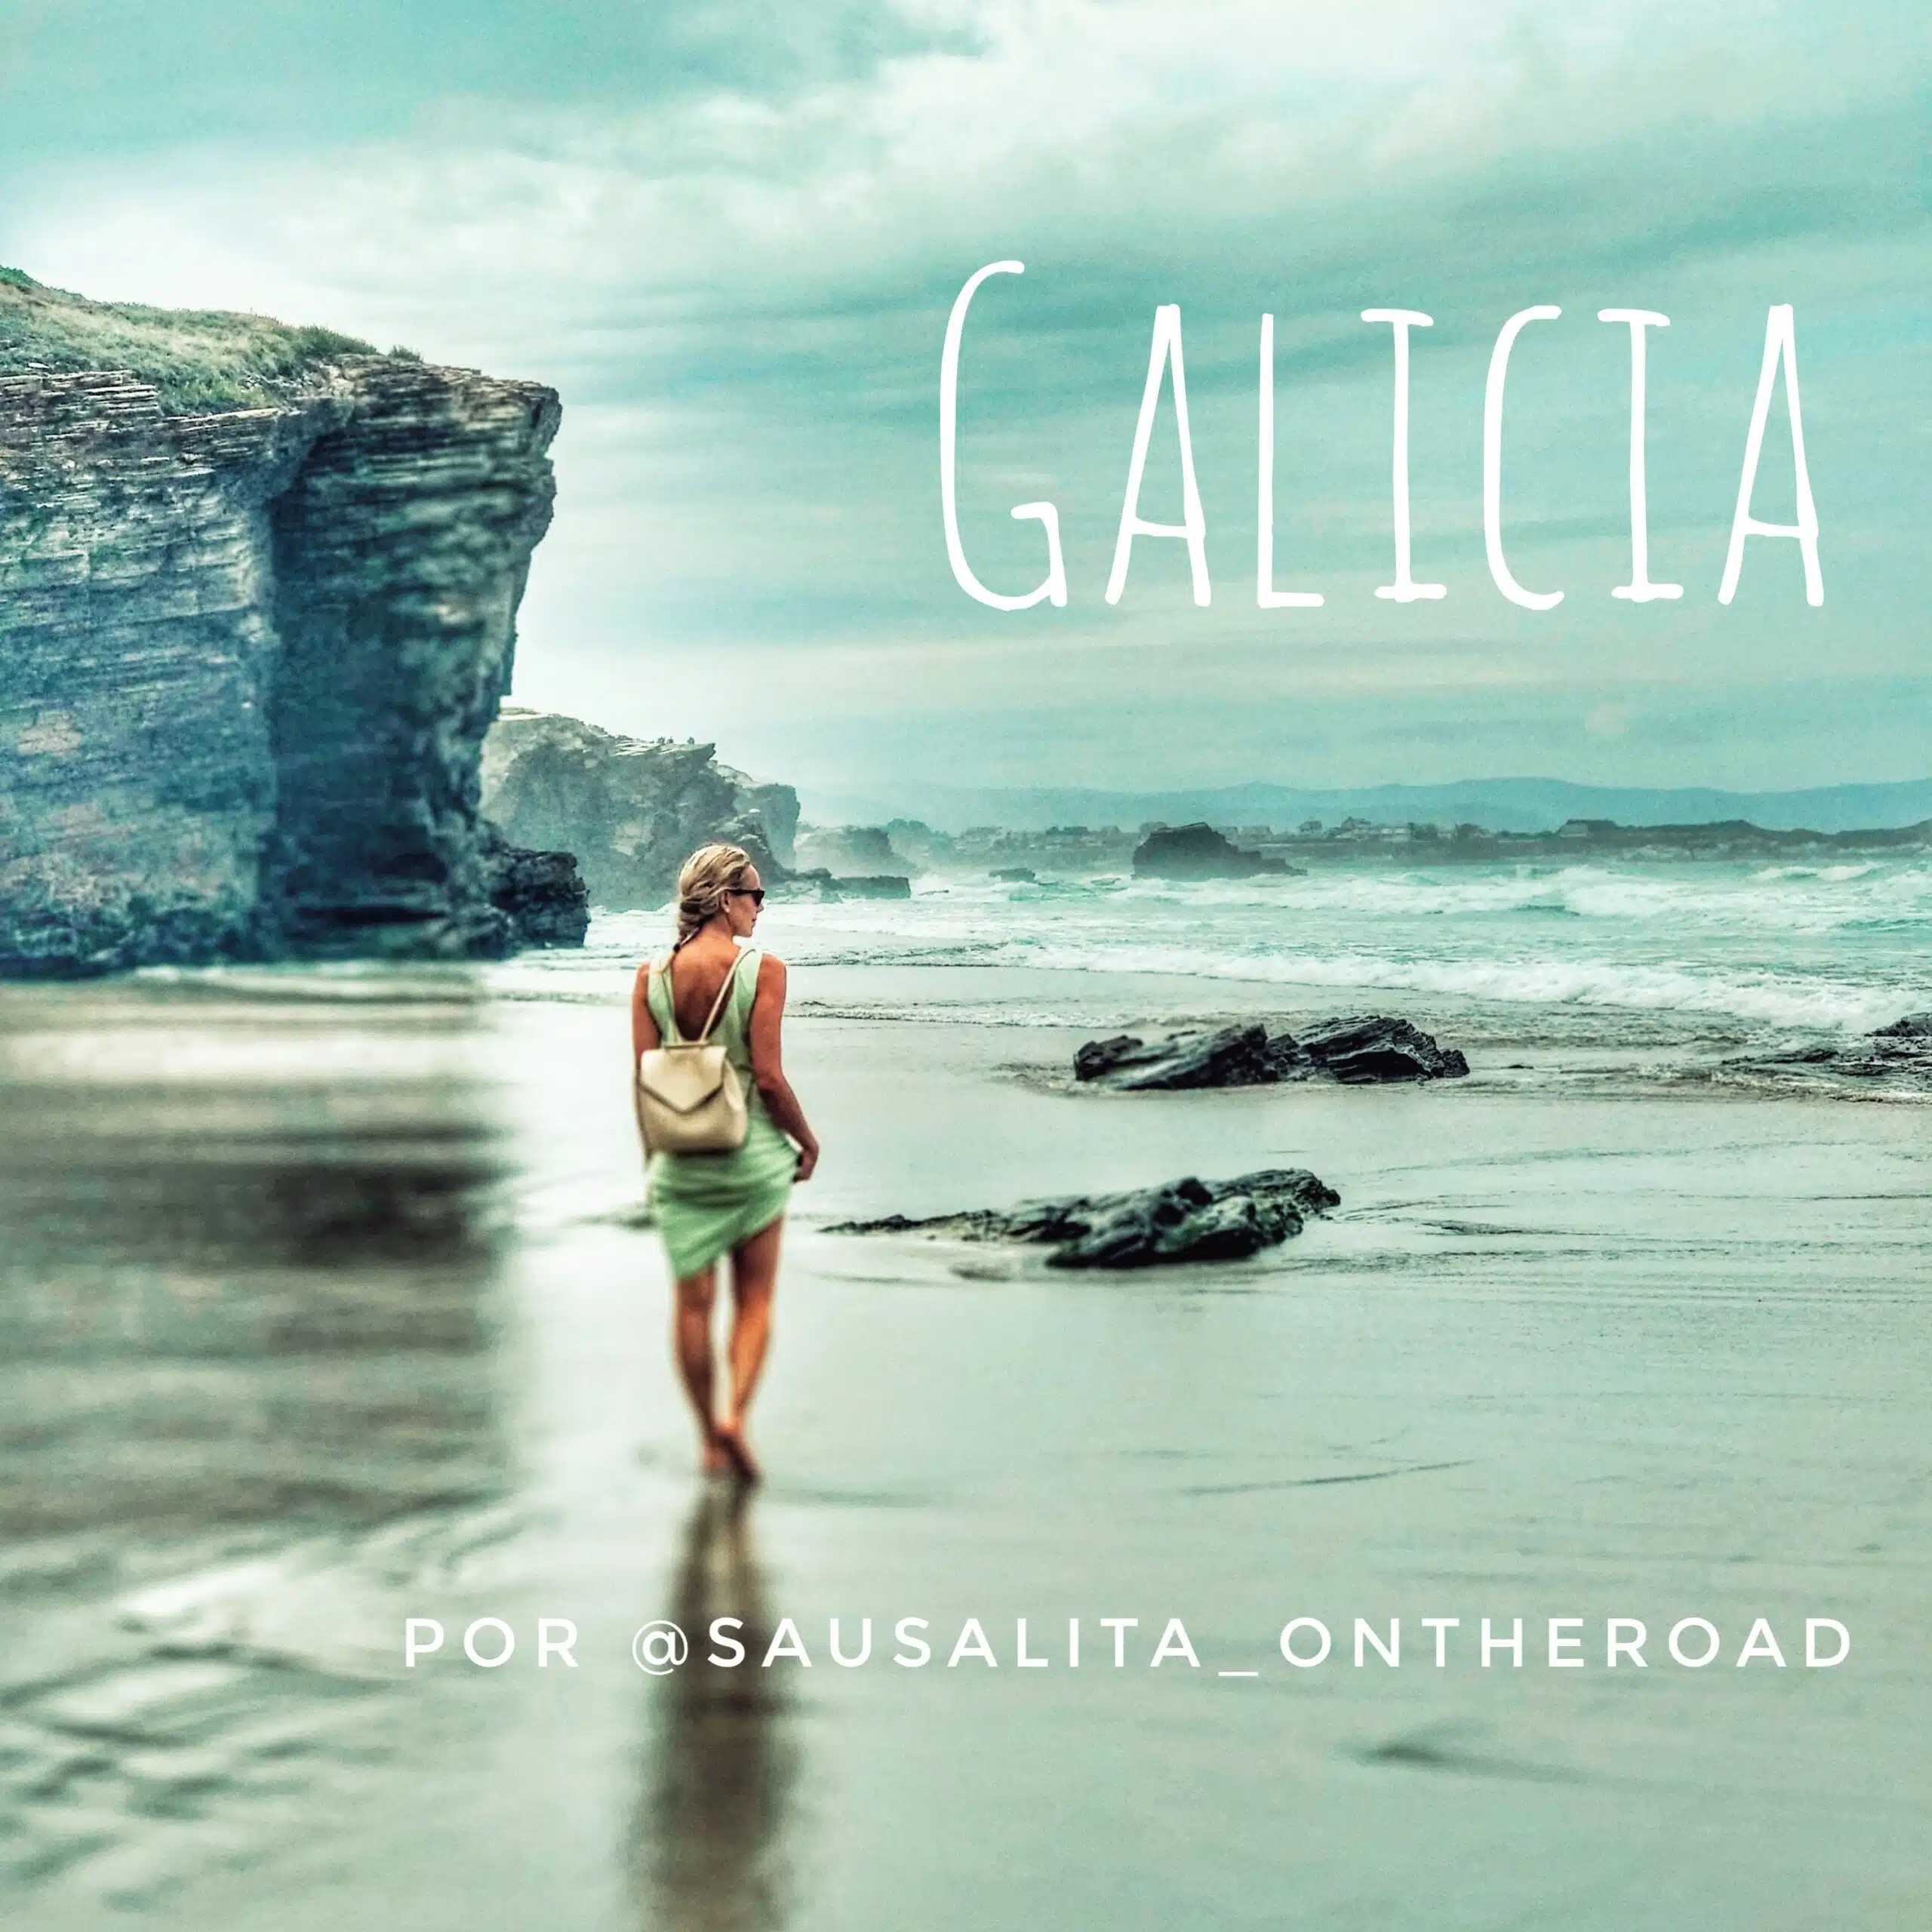 ⭐ Discover Galicia by motorhome or camper through 21 essential destinations ⭐